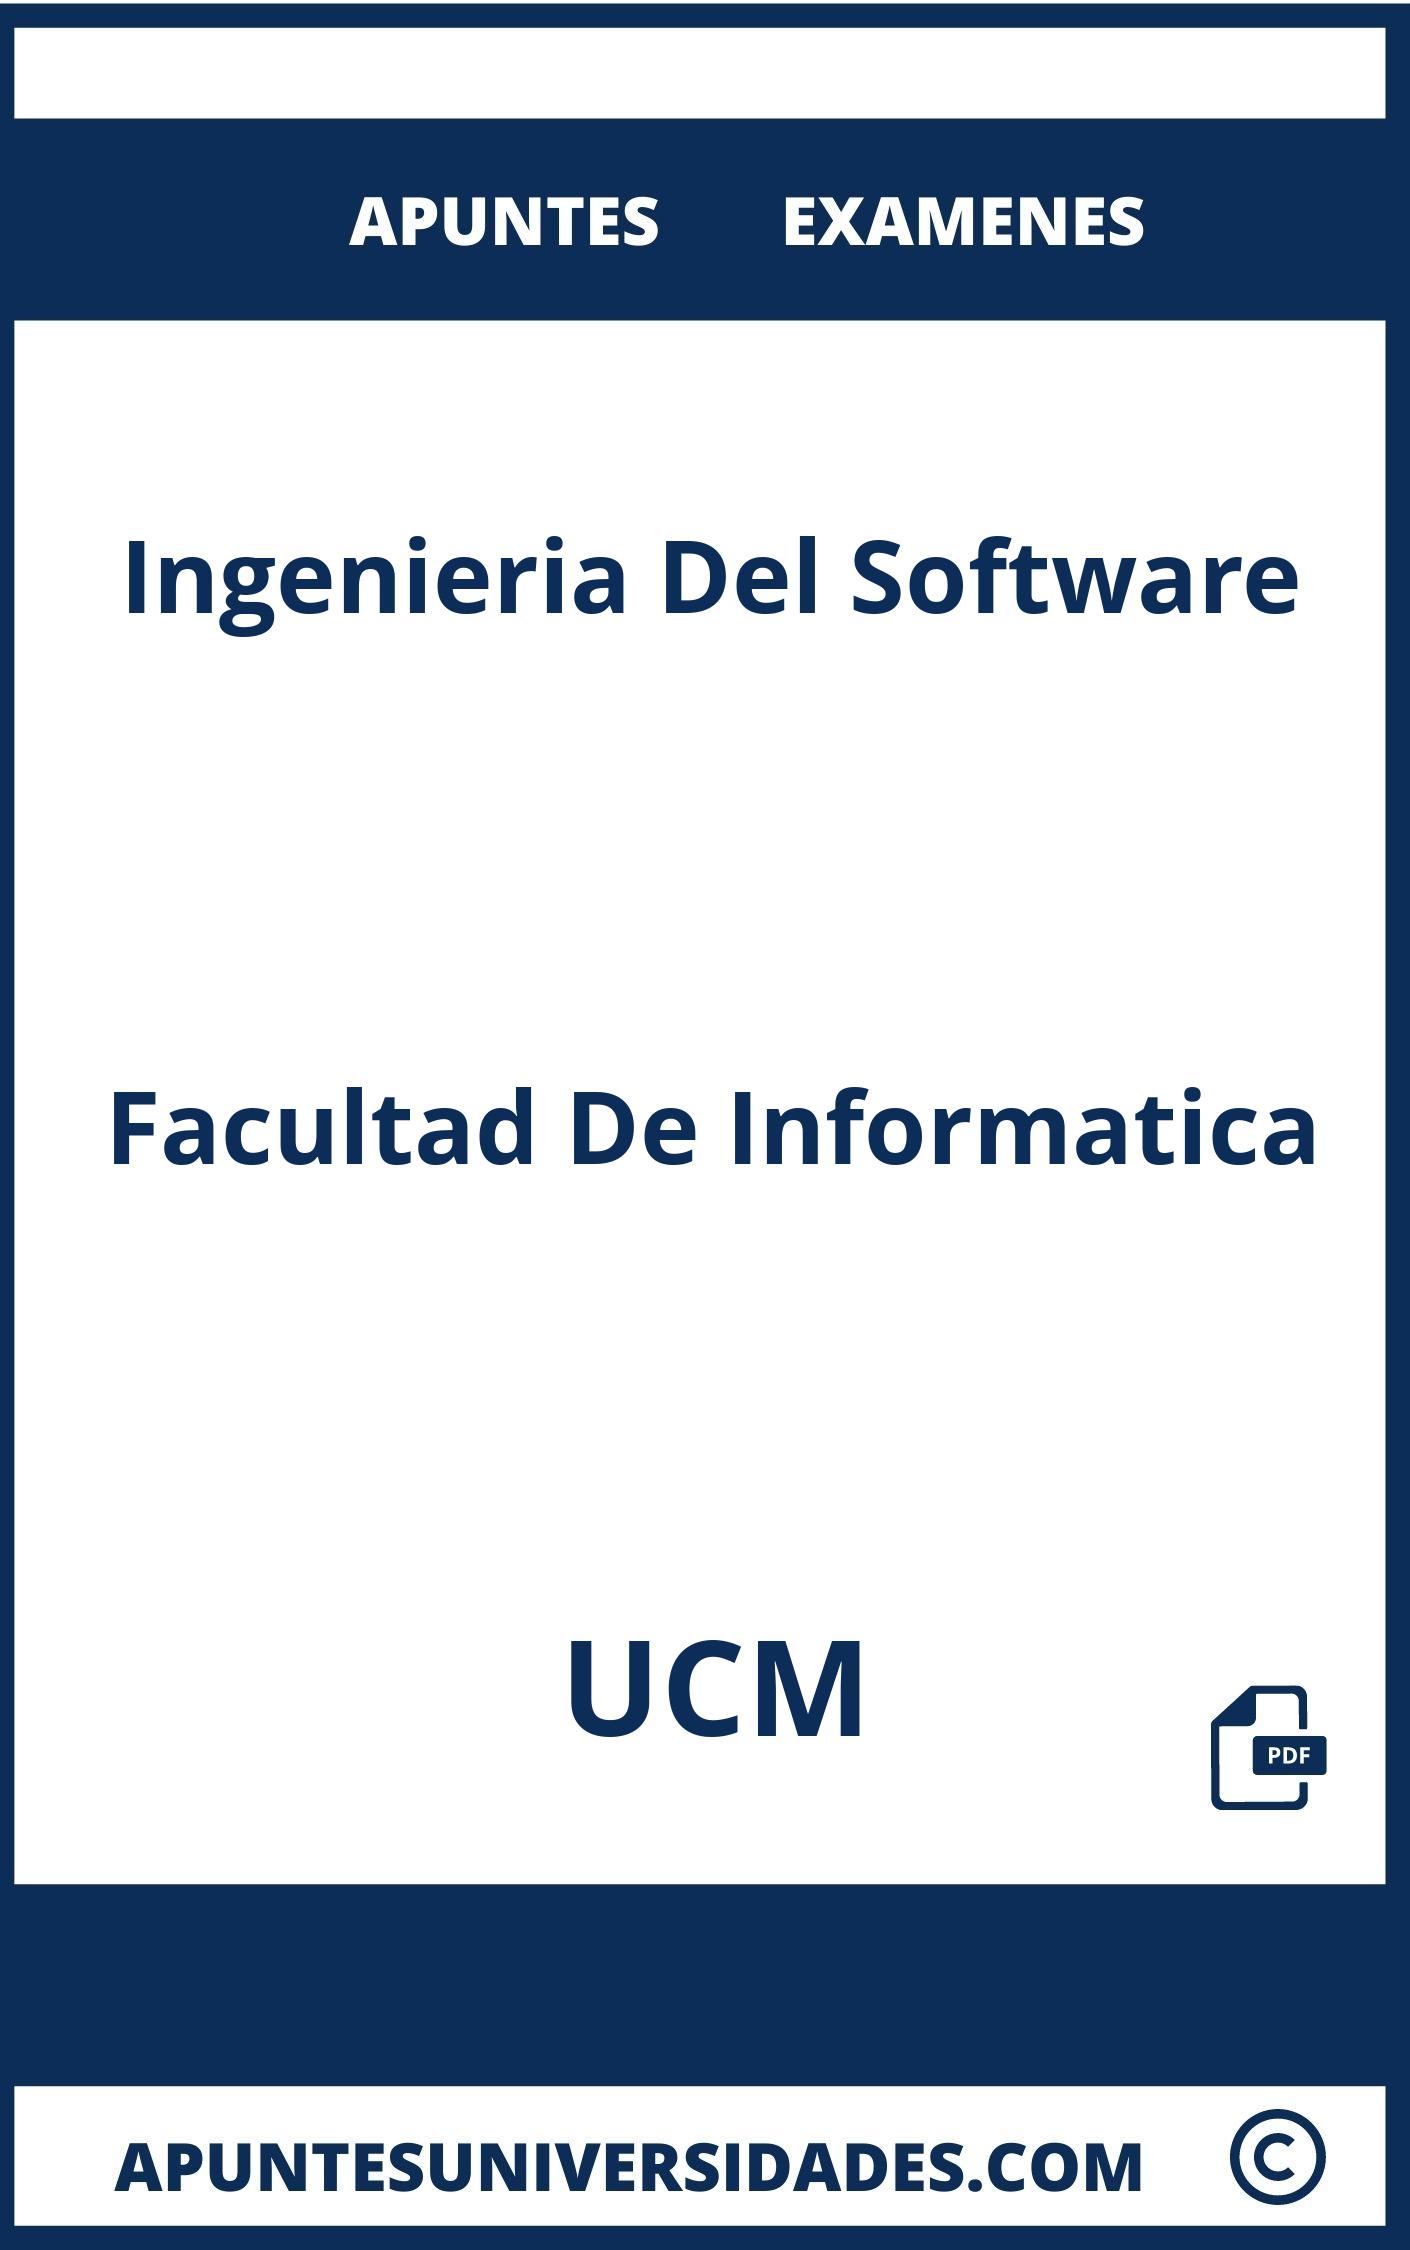 Apuntes Examenes Ingenieria Del Software UCM